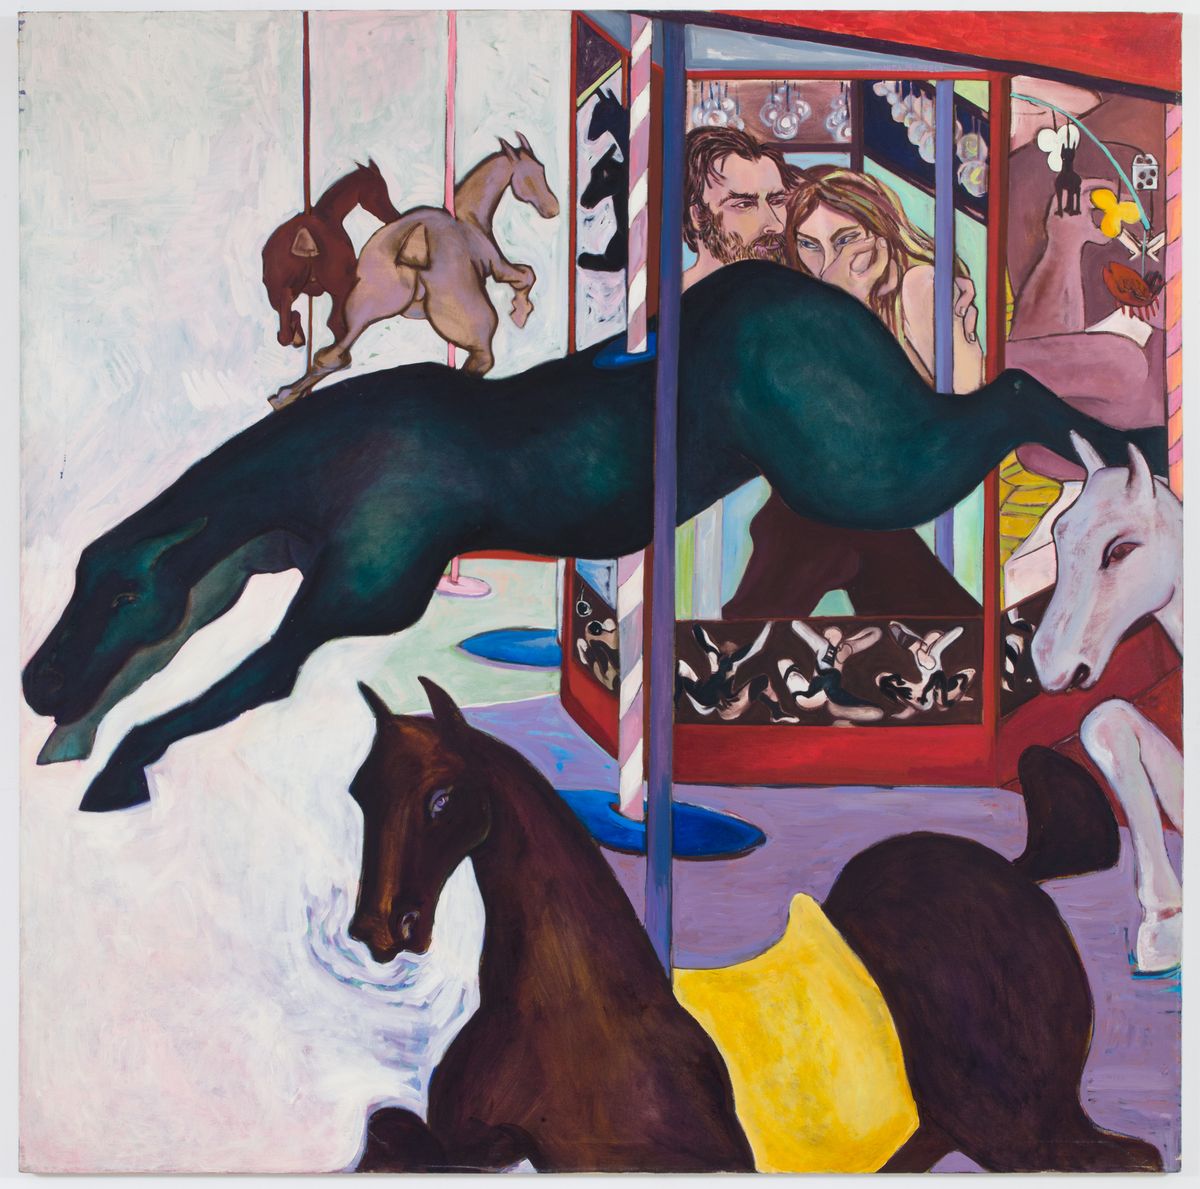 Juanita McNeely, Freedom?, 1975, huile sur lin, 187,96 x 187,96 cm. Courtesy Natalie Seroussi

